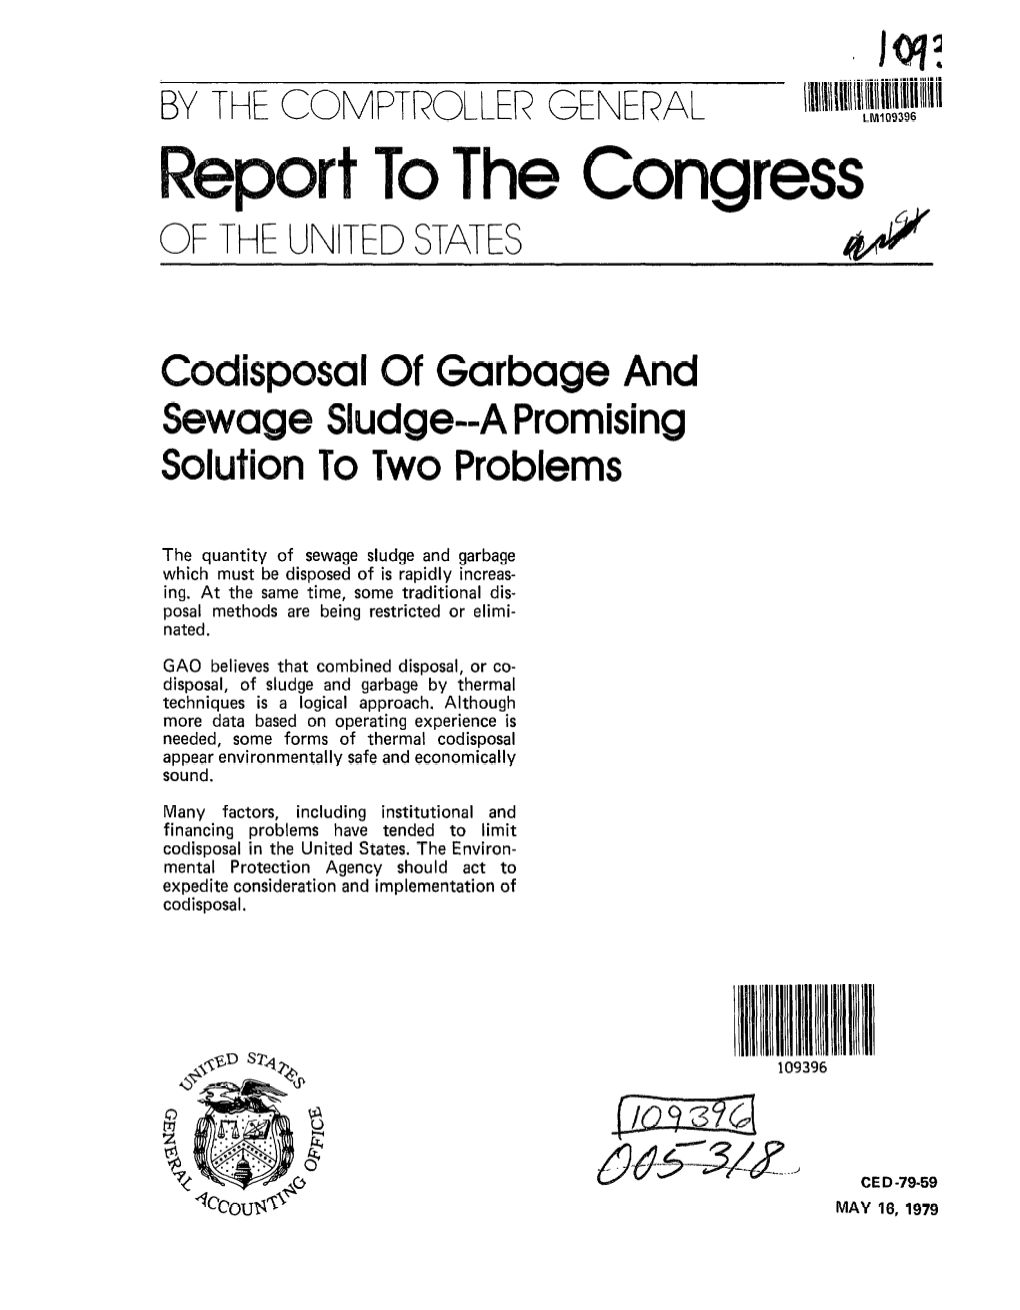 CED-79-59 Codisposal of Garbage and Sewage Sludge